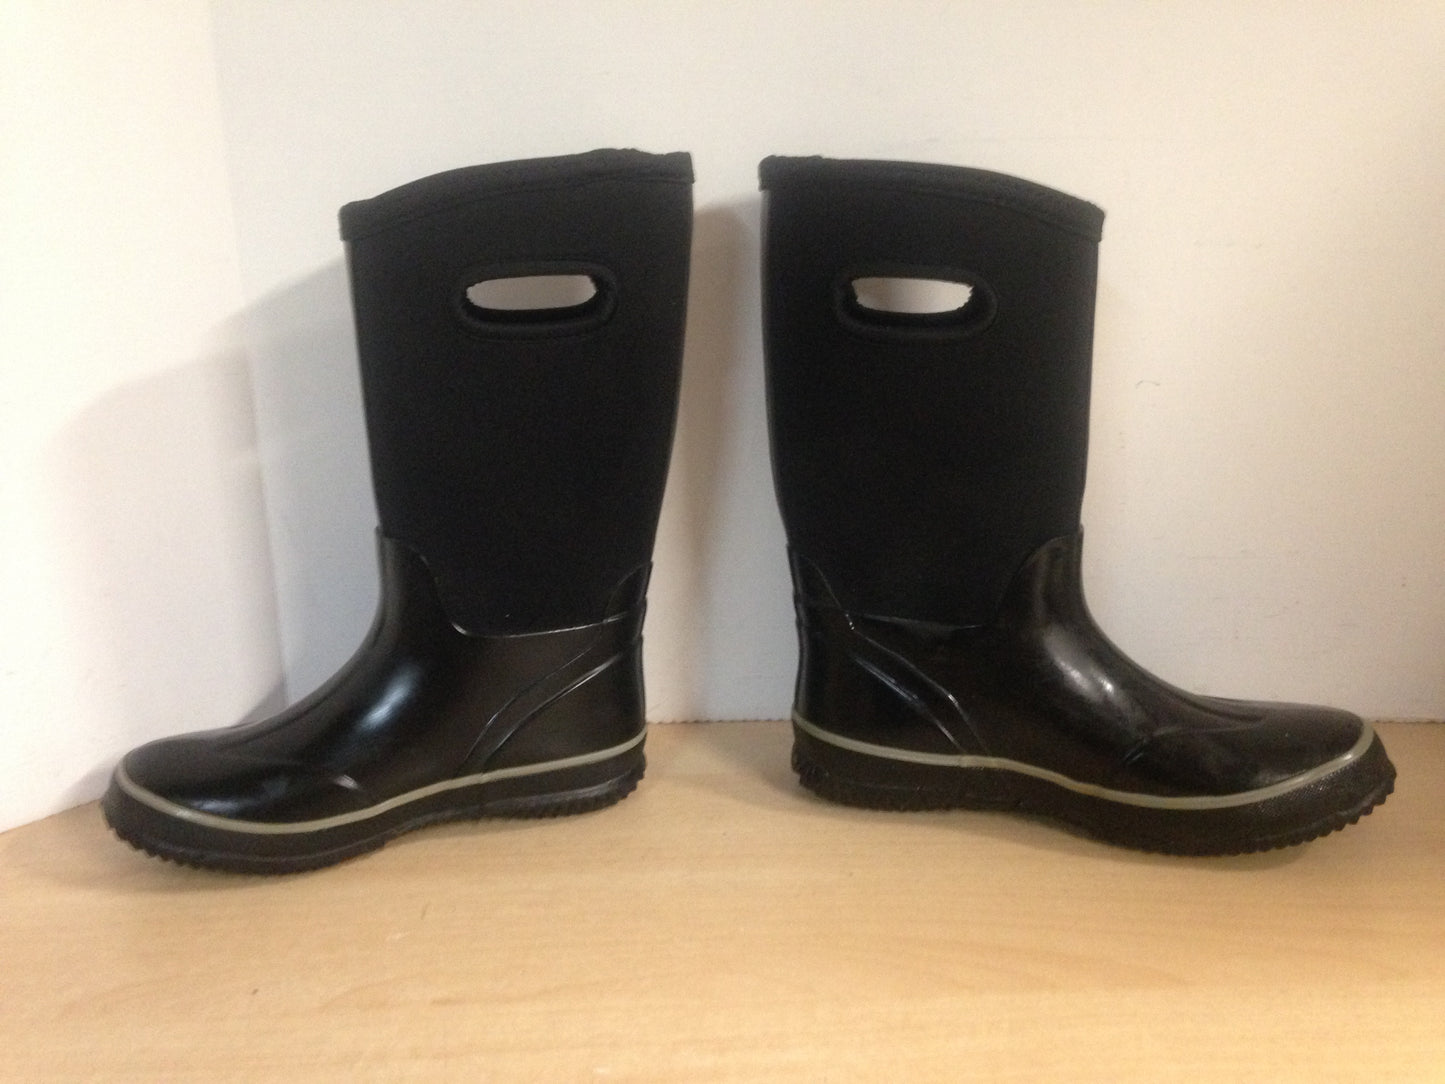 Bogs Style Child Size 3 Neoprene Rubber Rain Winter Boots Black Grey Excellent -20 Degree